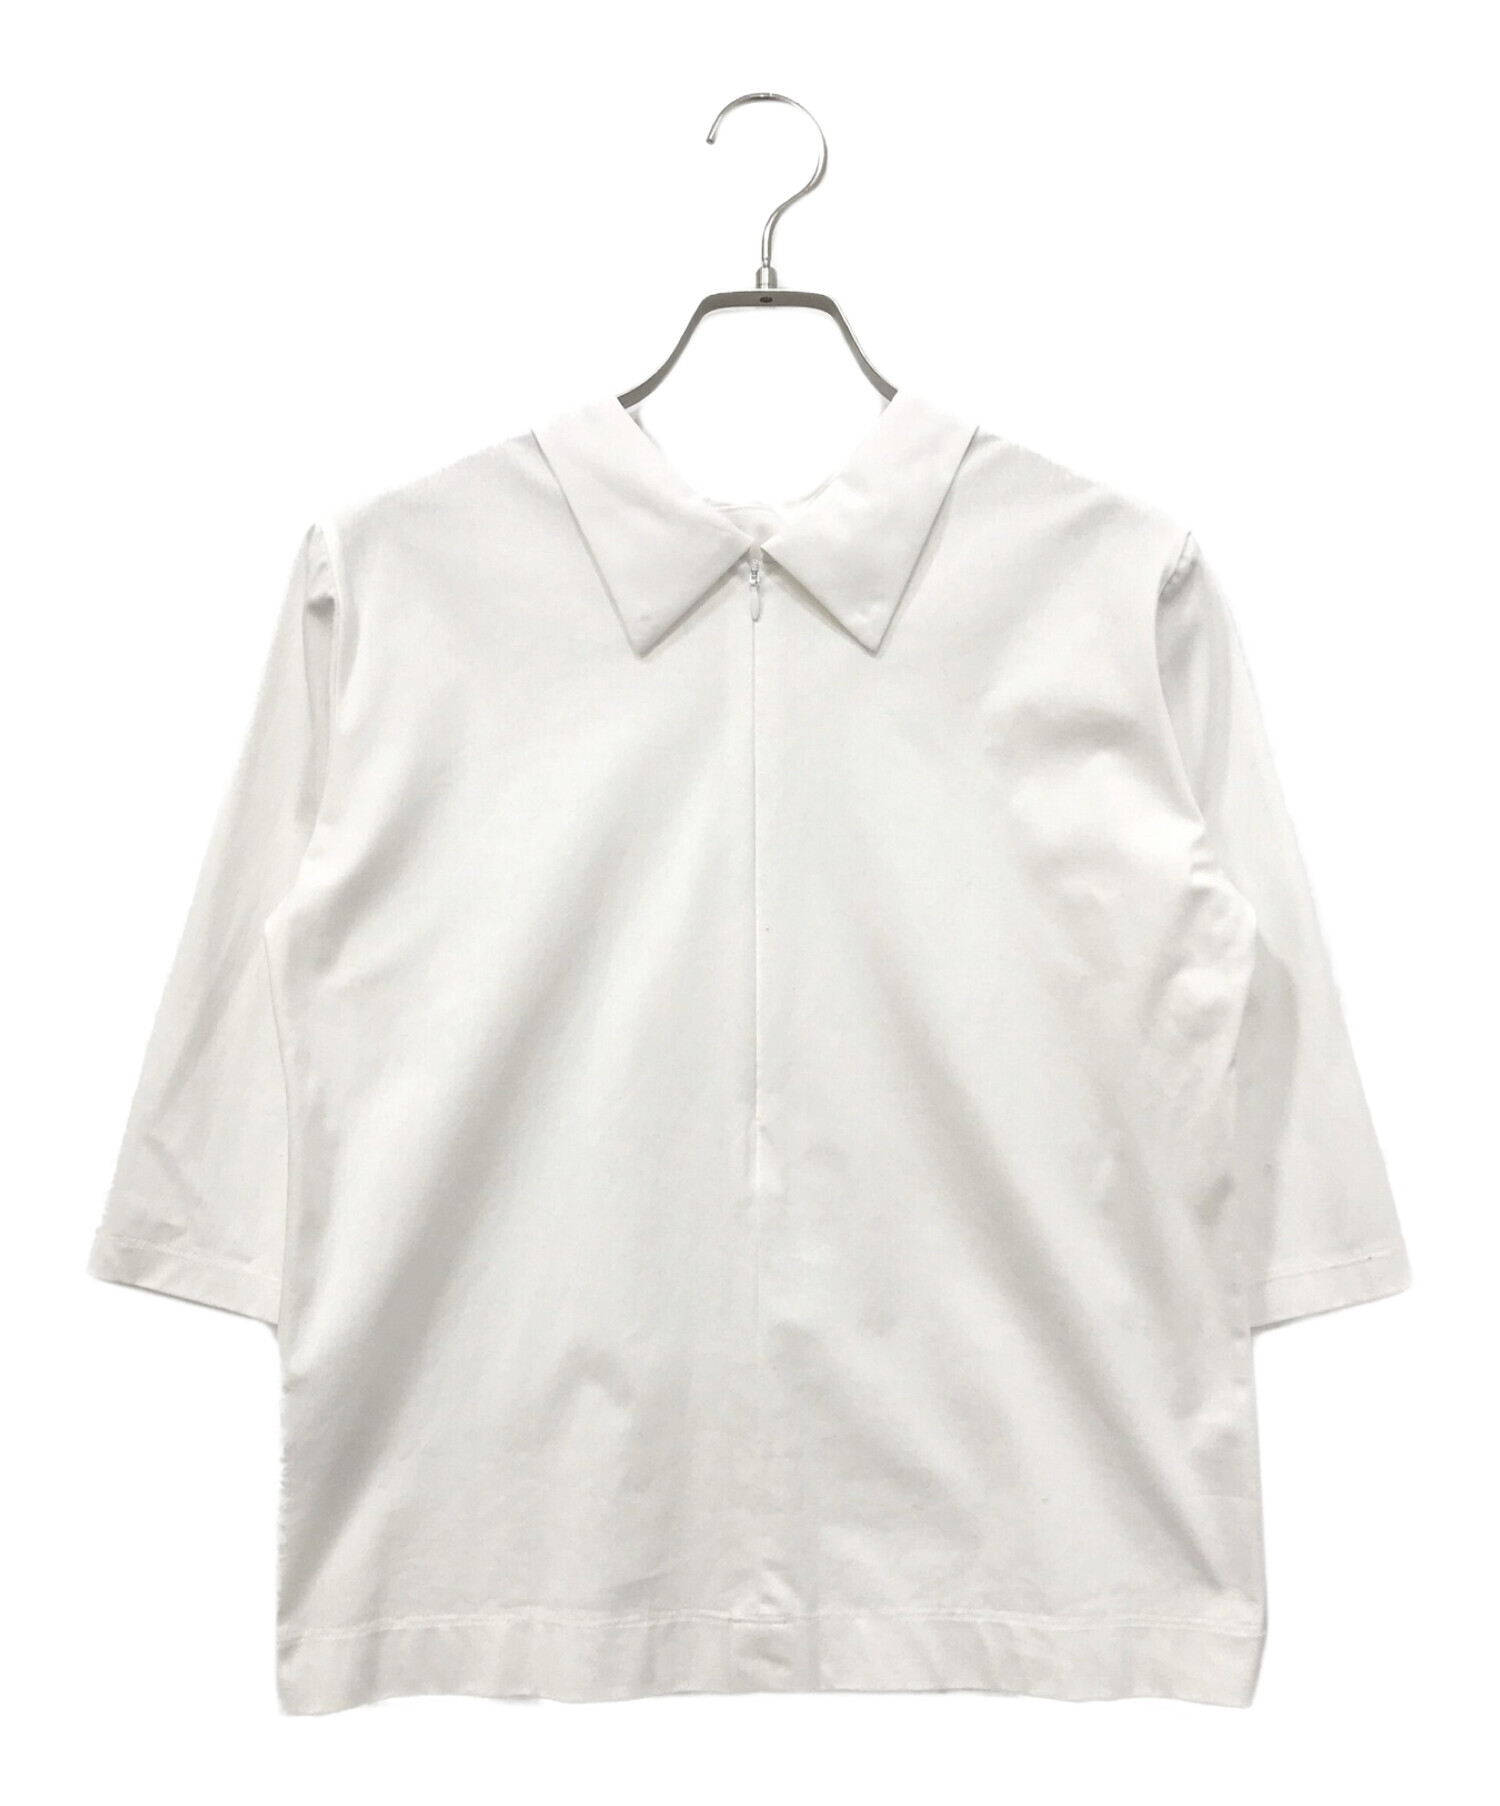 SHE TOKYO (シートーキョー) Monica blouse ホワイト サイズ:1